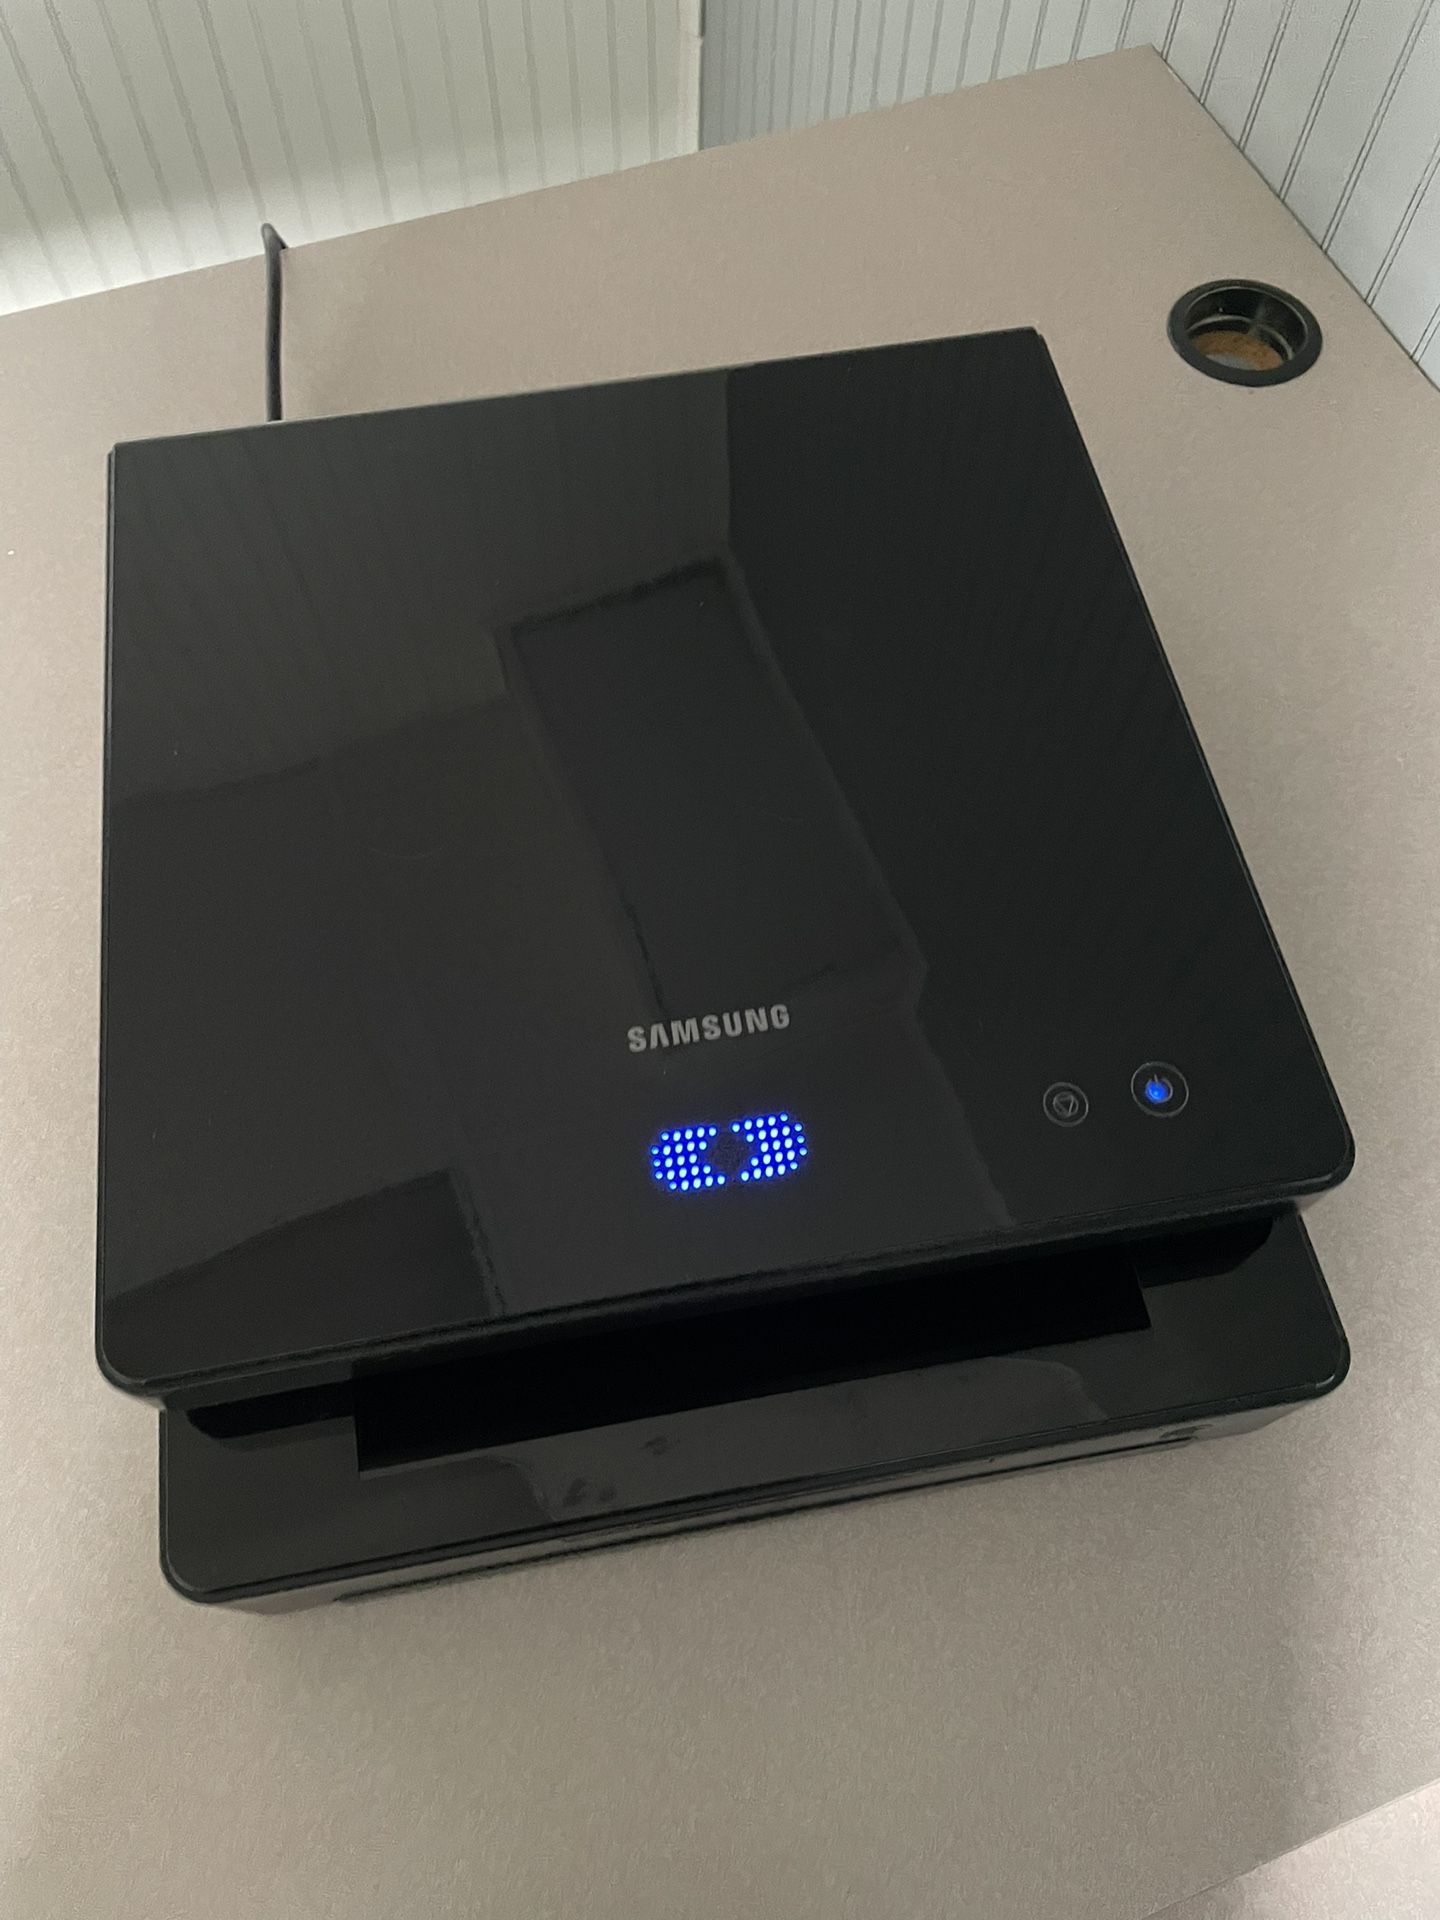 Samsung ML-1630 Laser Printer Like New 